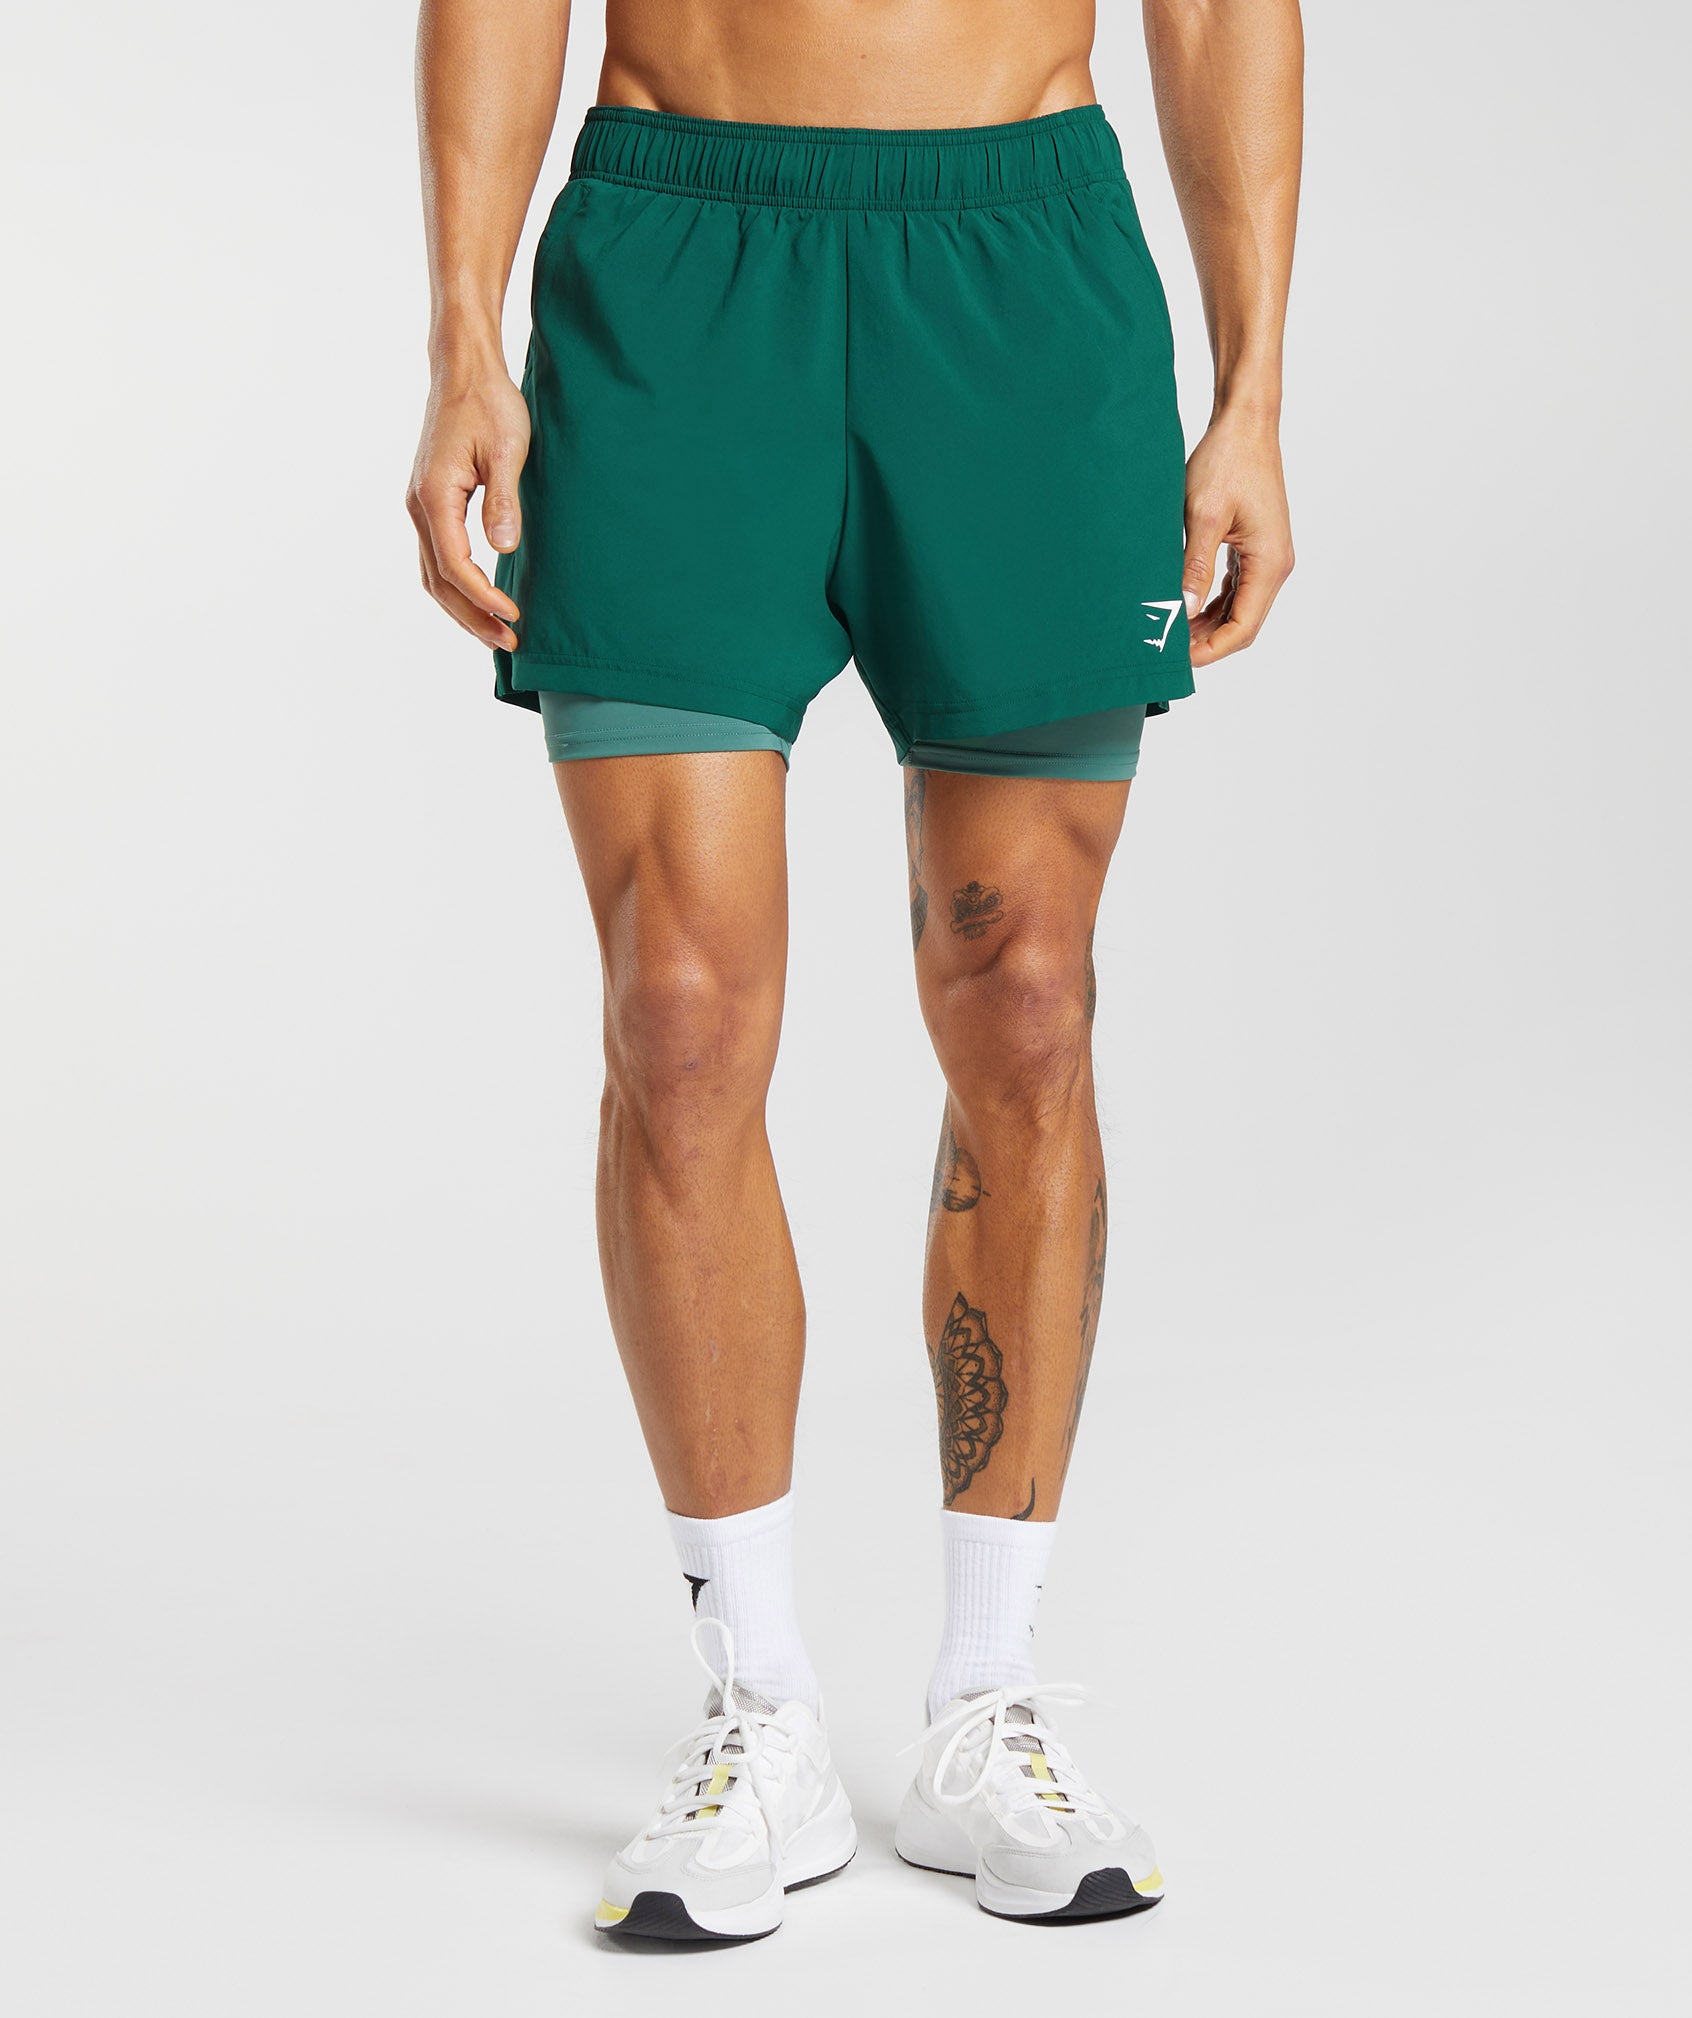 Gymshark Arrival 5 Shorts - Firefly Green